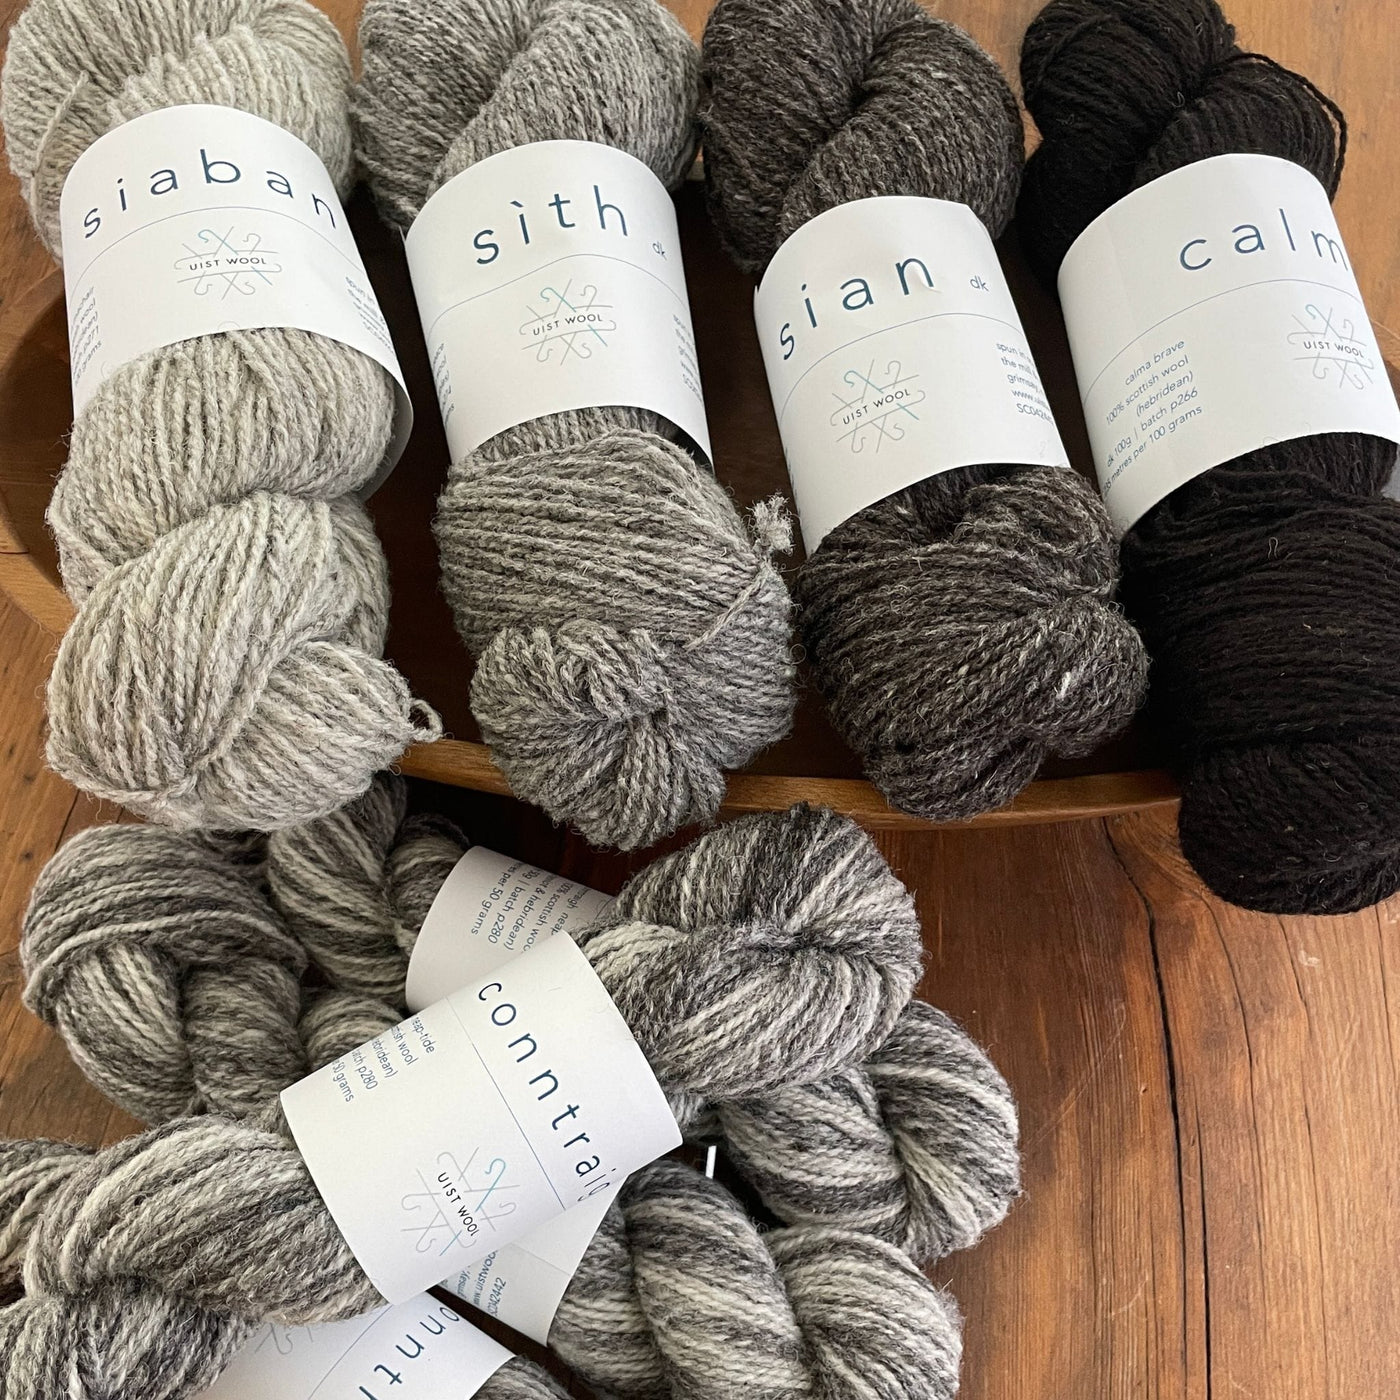 UIST Wool DK weight shown in natural grey to brown skeins.